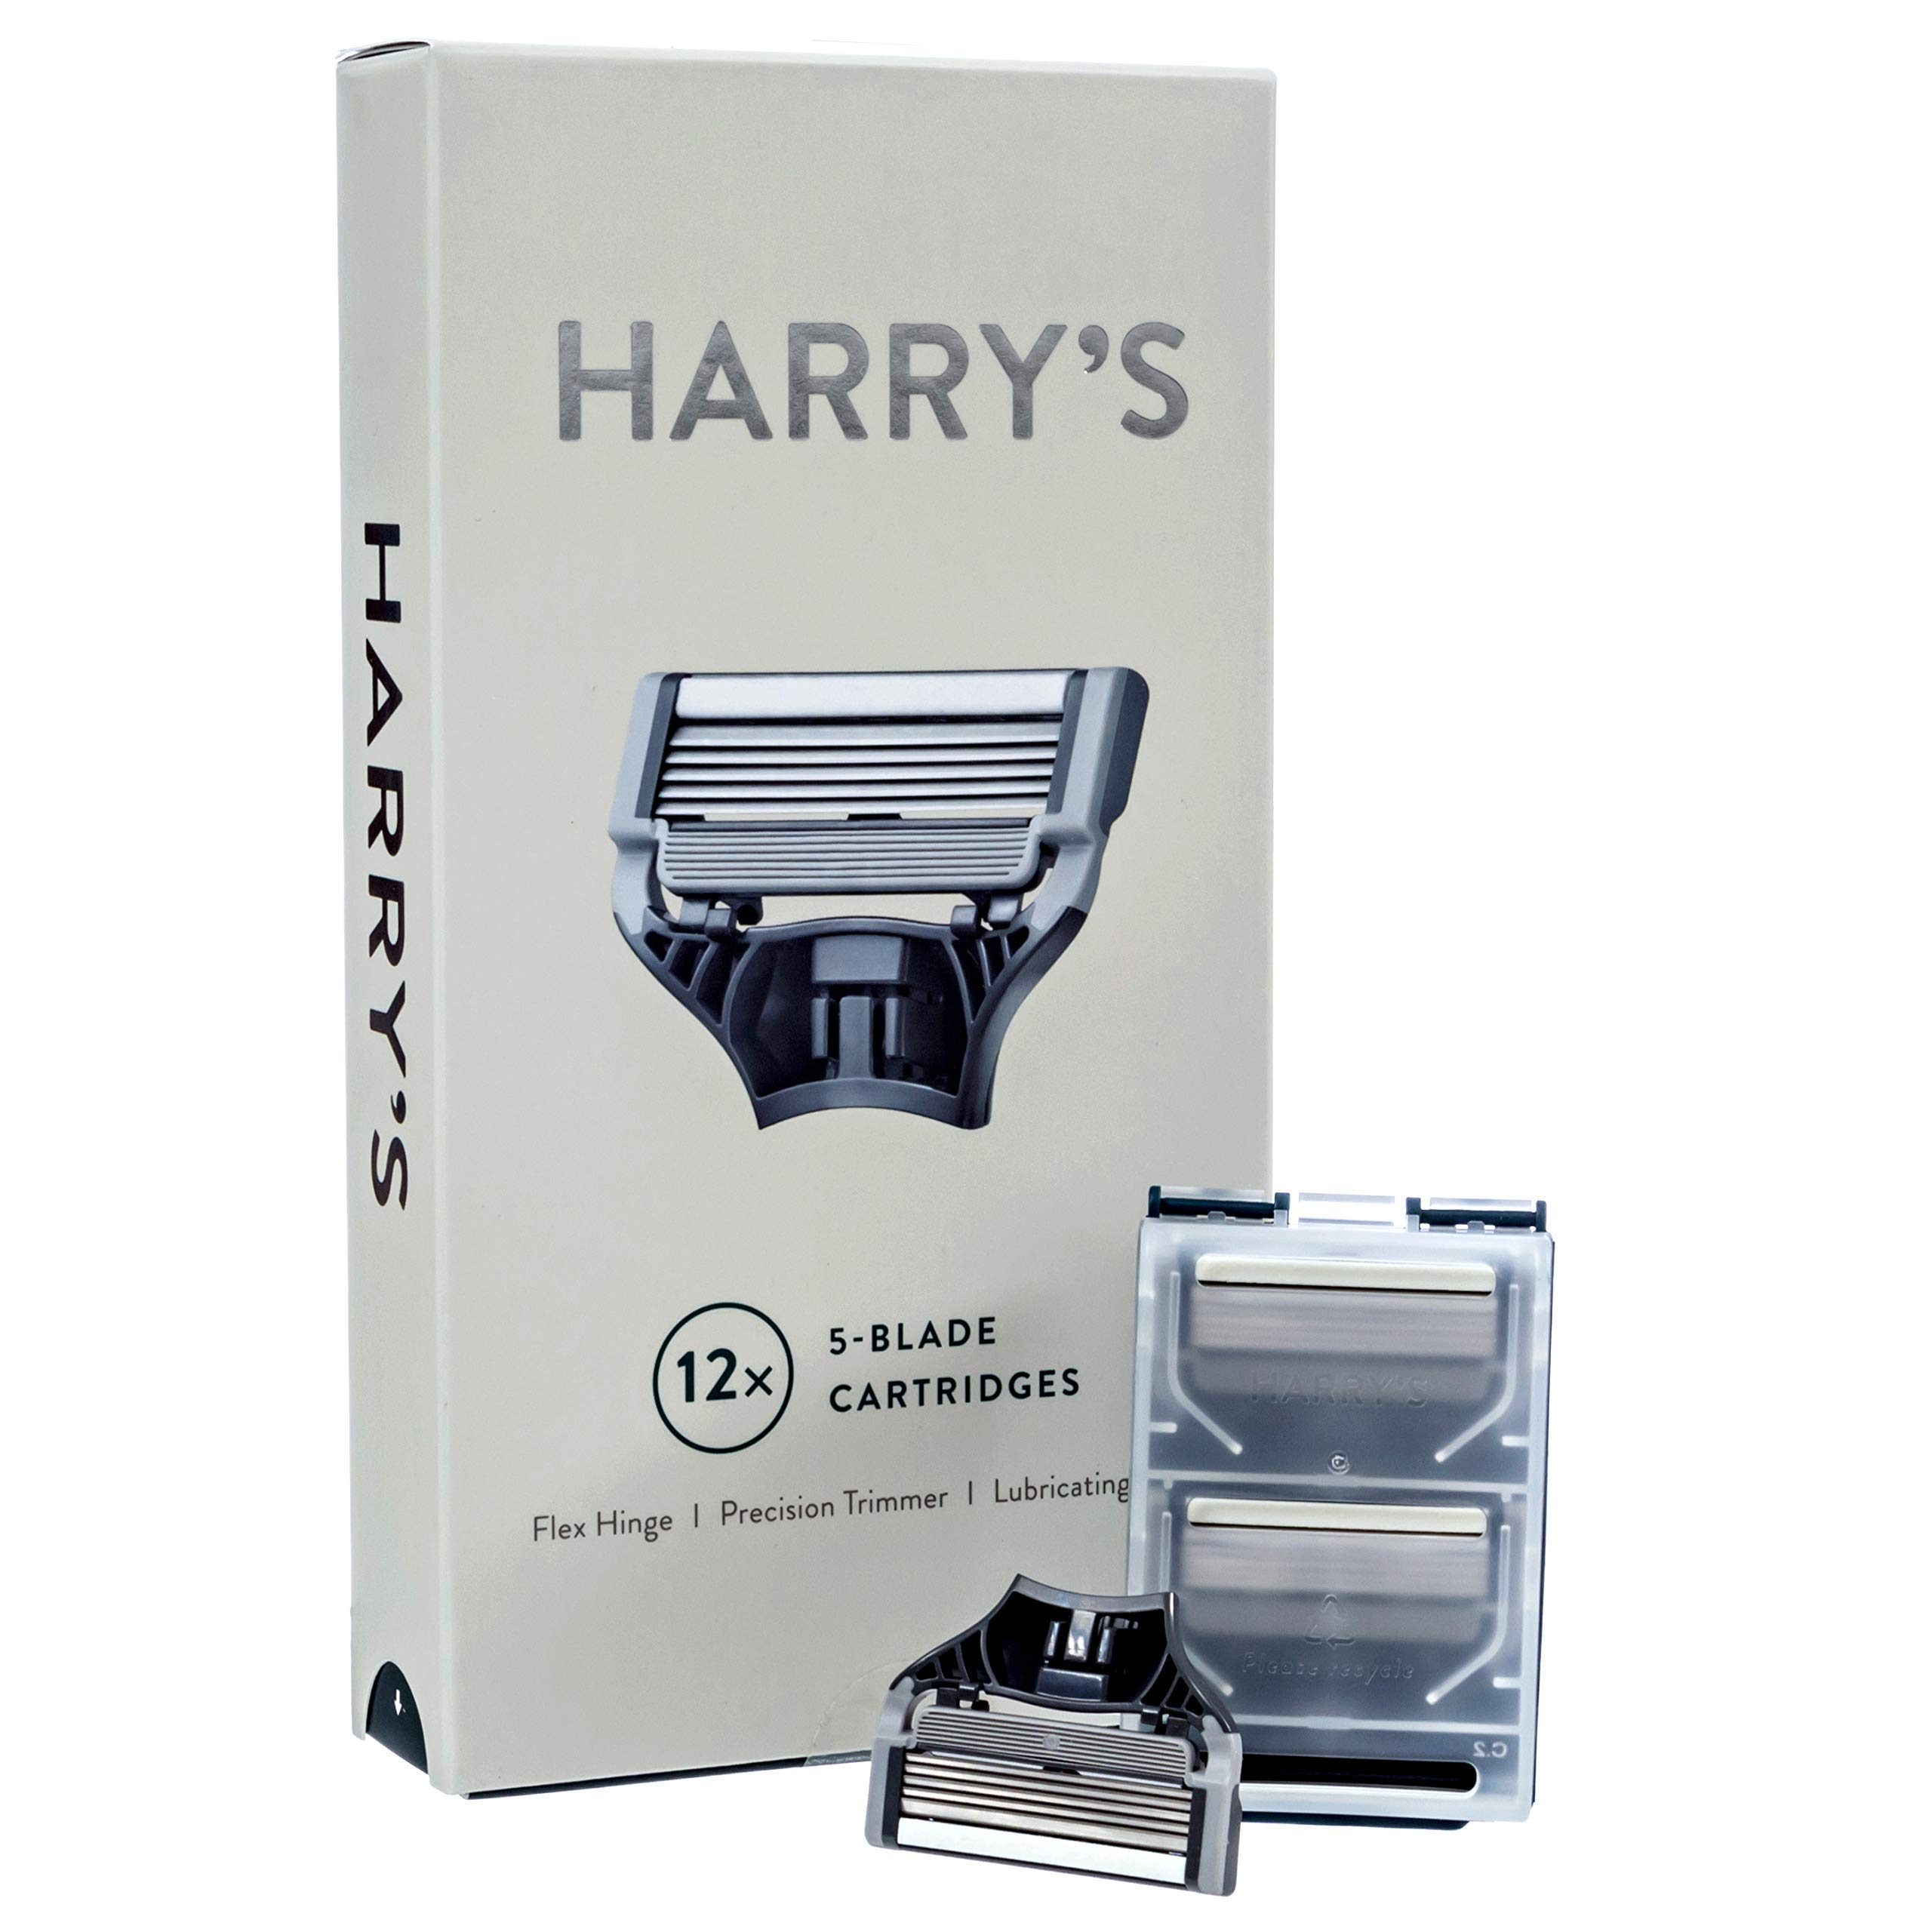 Harry's Cartridges, 5-Blade - 8 cartridges